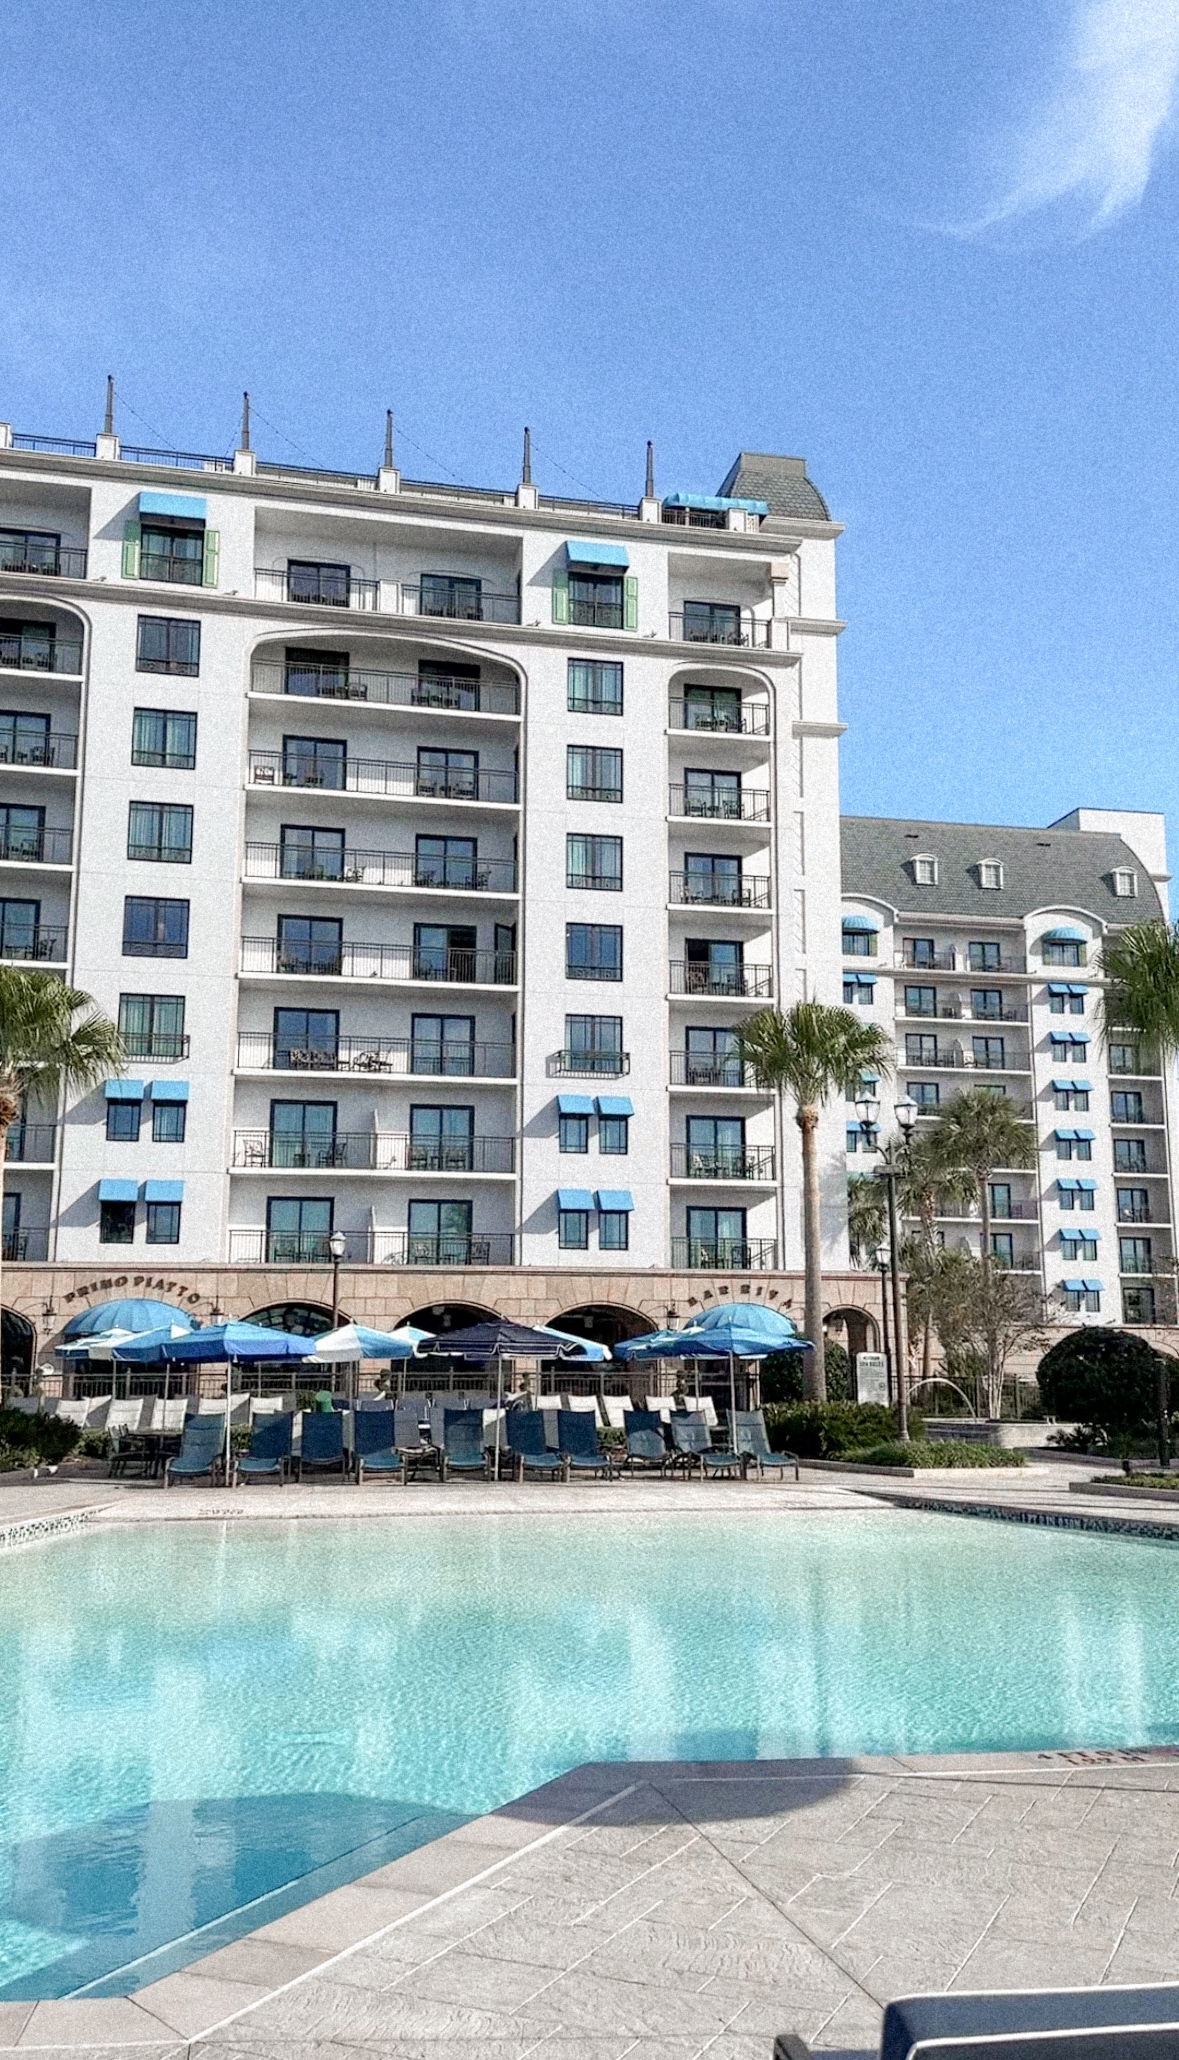 Zero-Entry Resort Pool at the Riviera Resort